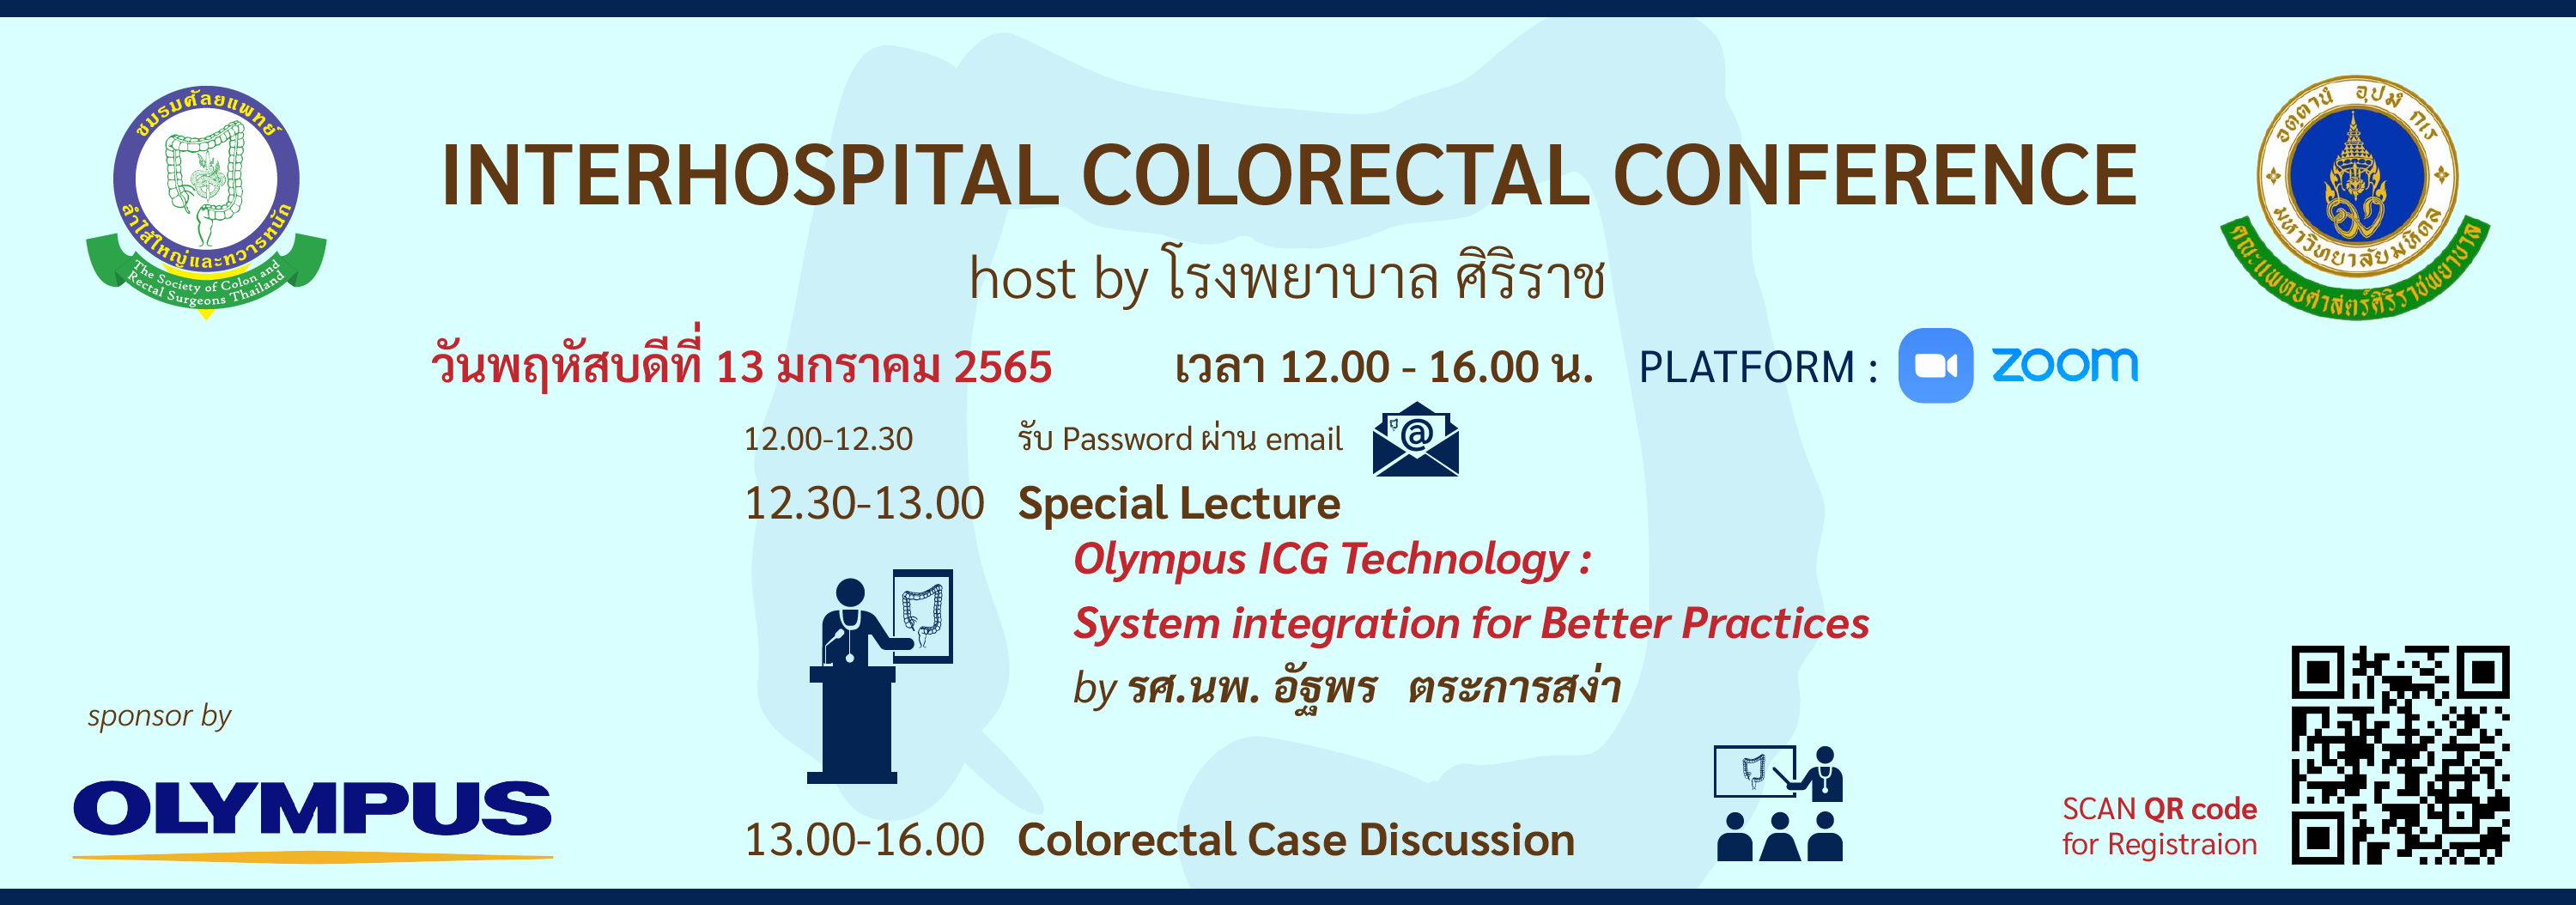 Interhospital colorectal conference 13 มกราคม 2565 hosted by โรงพยาบาล ศิริราช